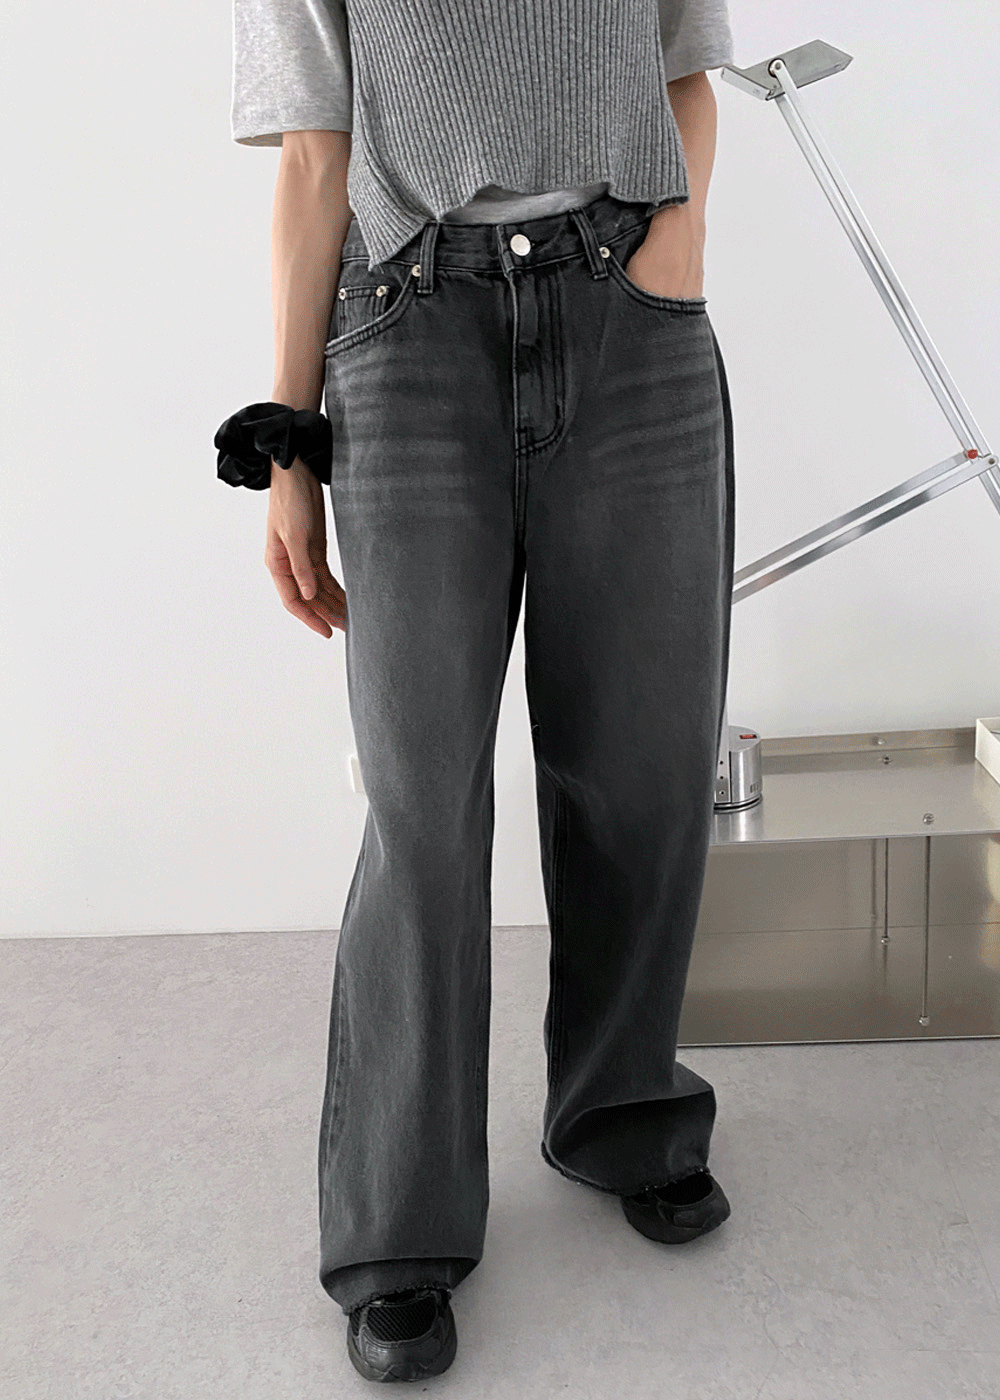 Low gray wide pants